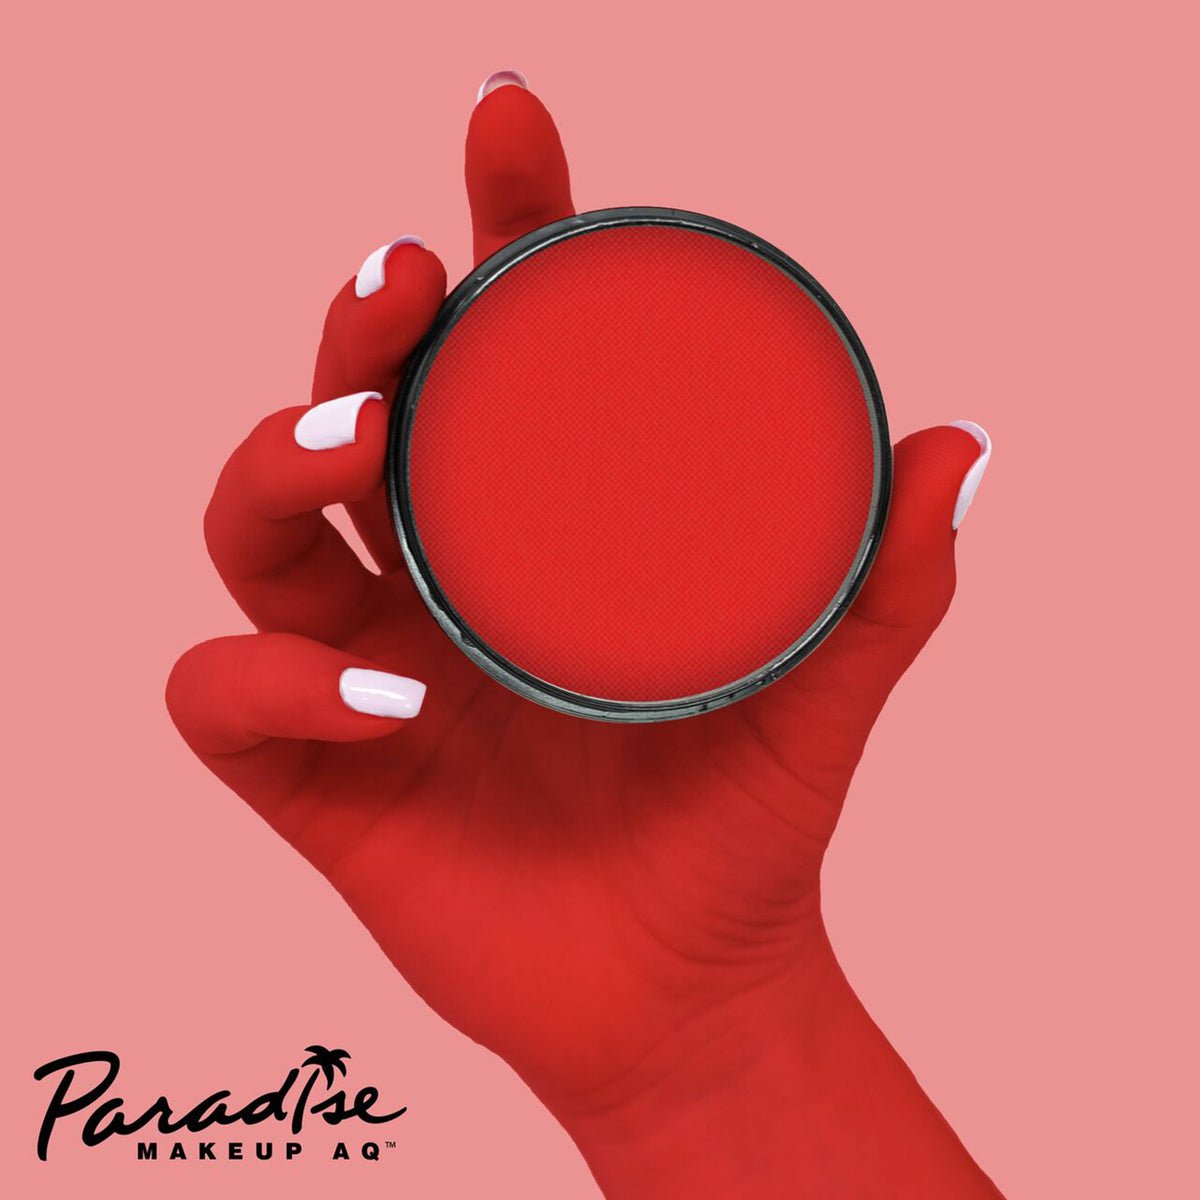 Paradise AQ Face Paint - Vulcan/Neon Red (1.4 oz/ 40 gm)